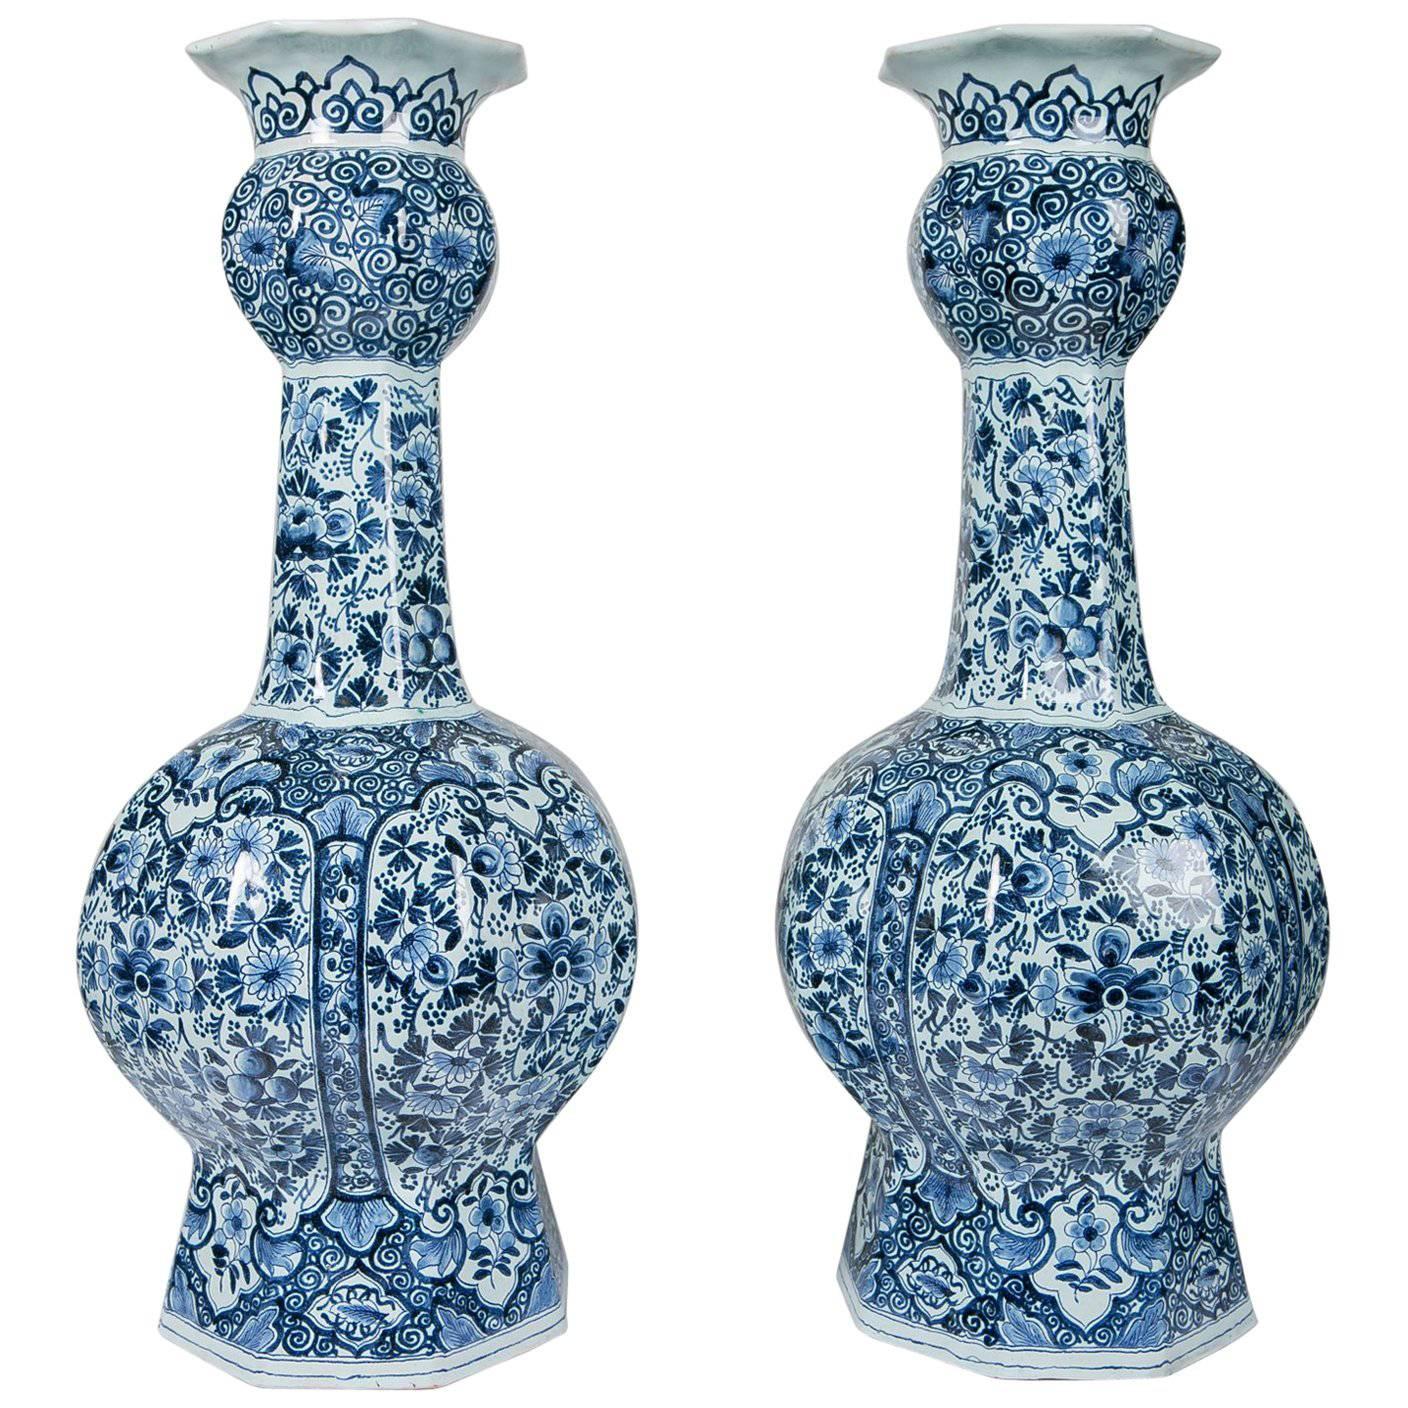 Blue and White Delft Vases Made circa 1850